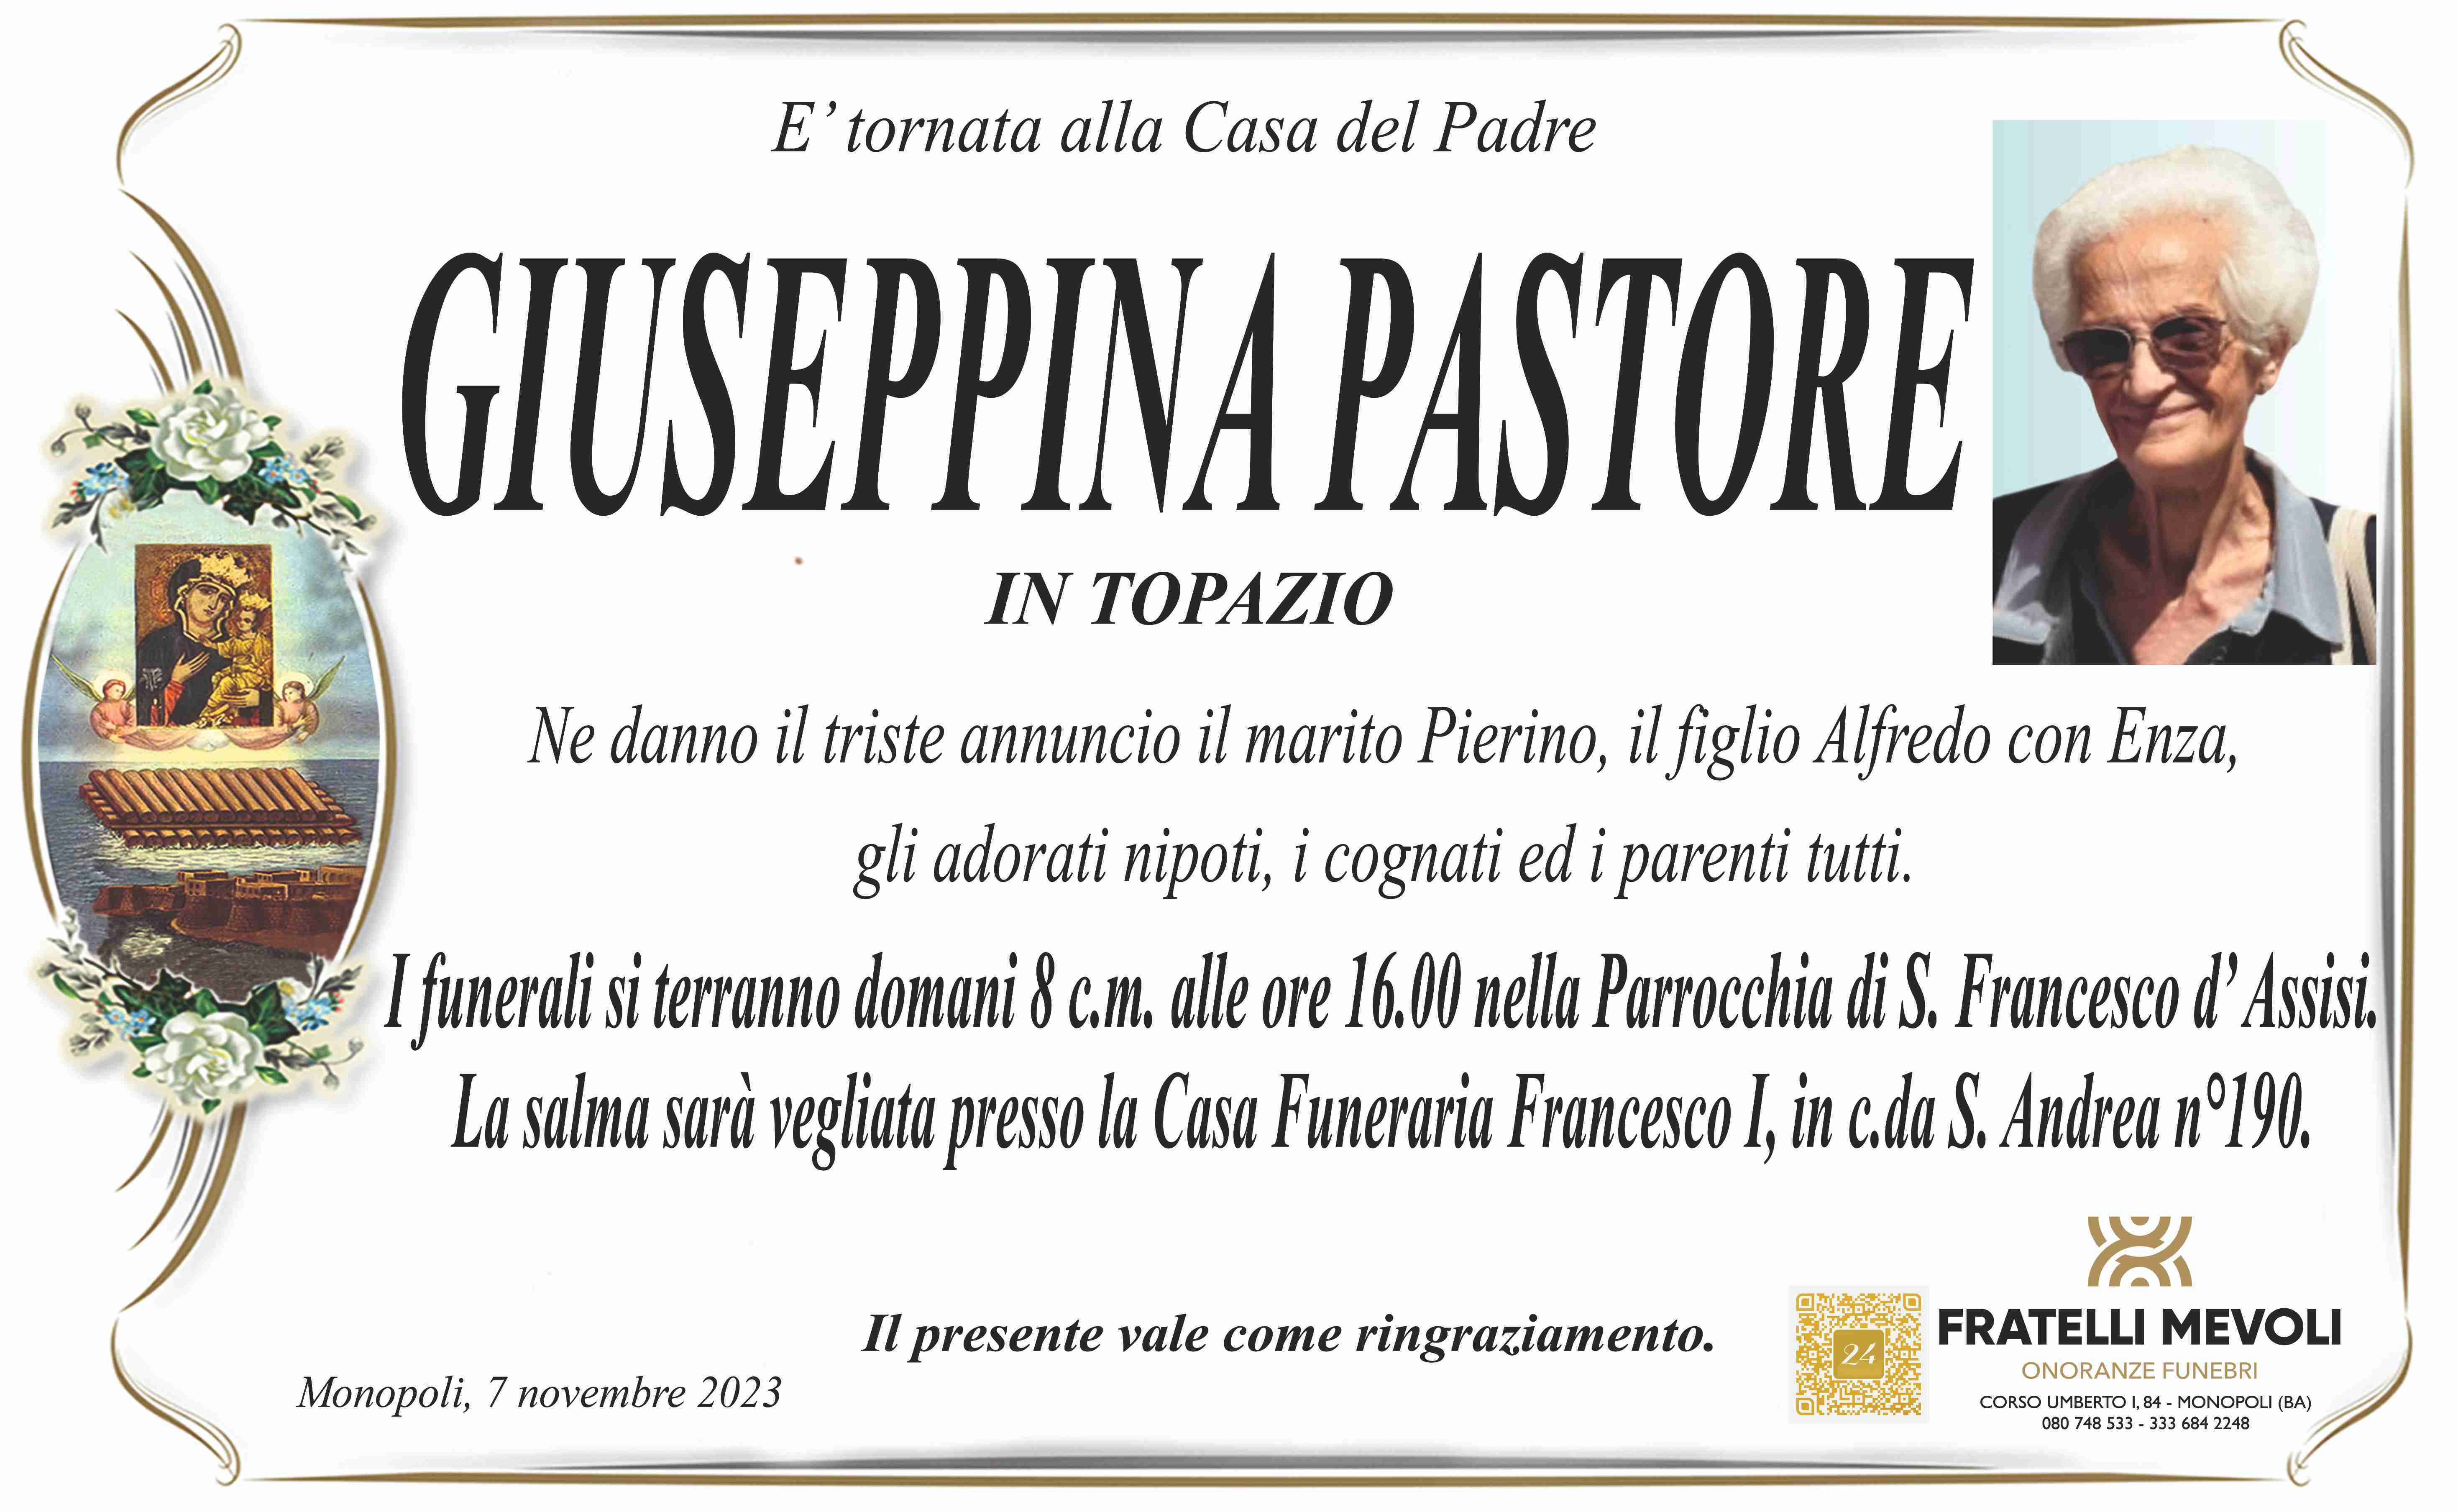 Giuseppina Pastore